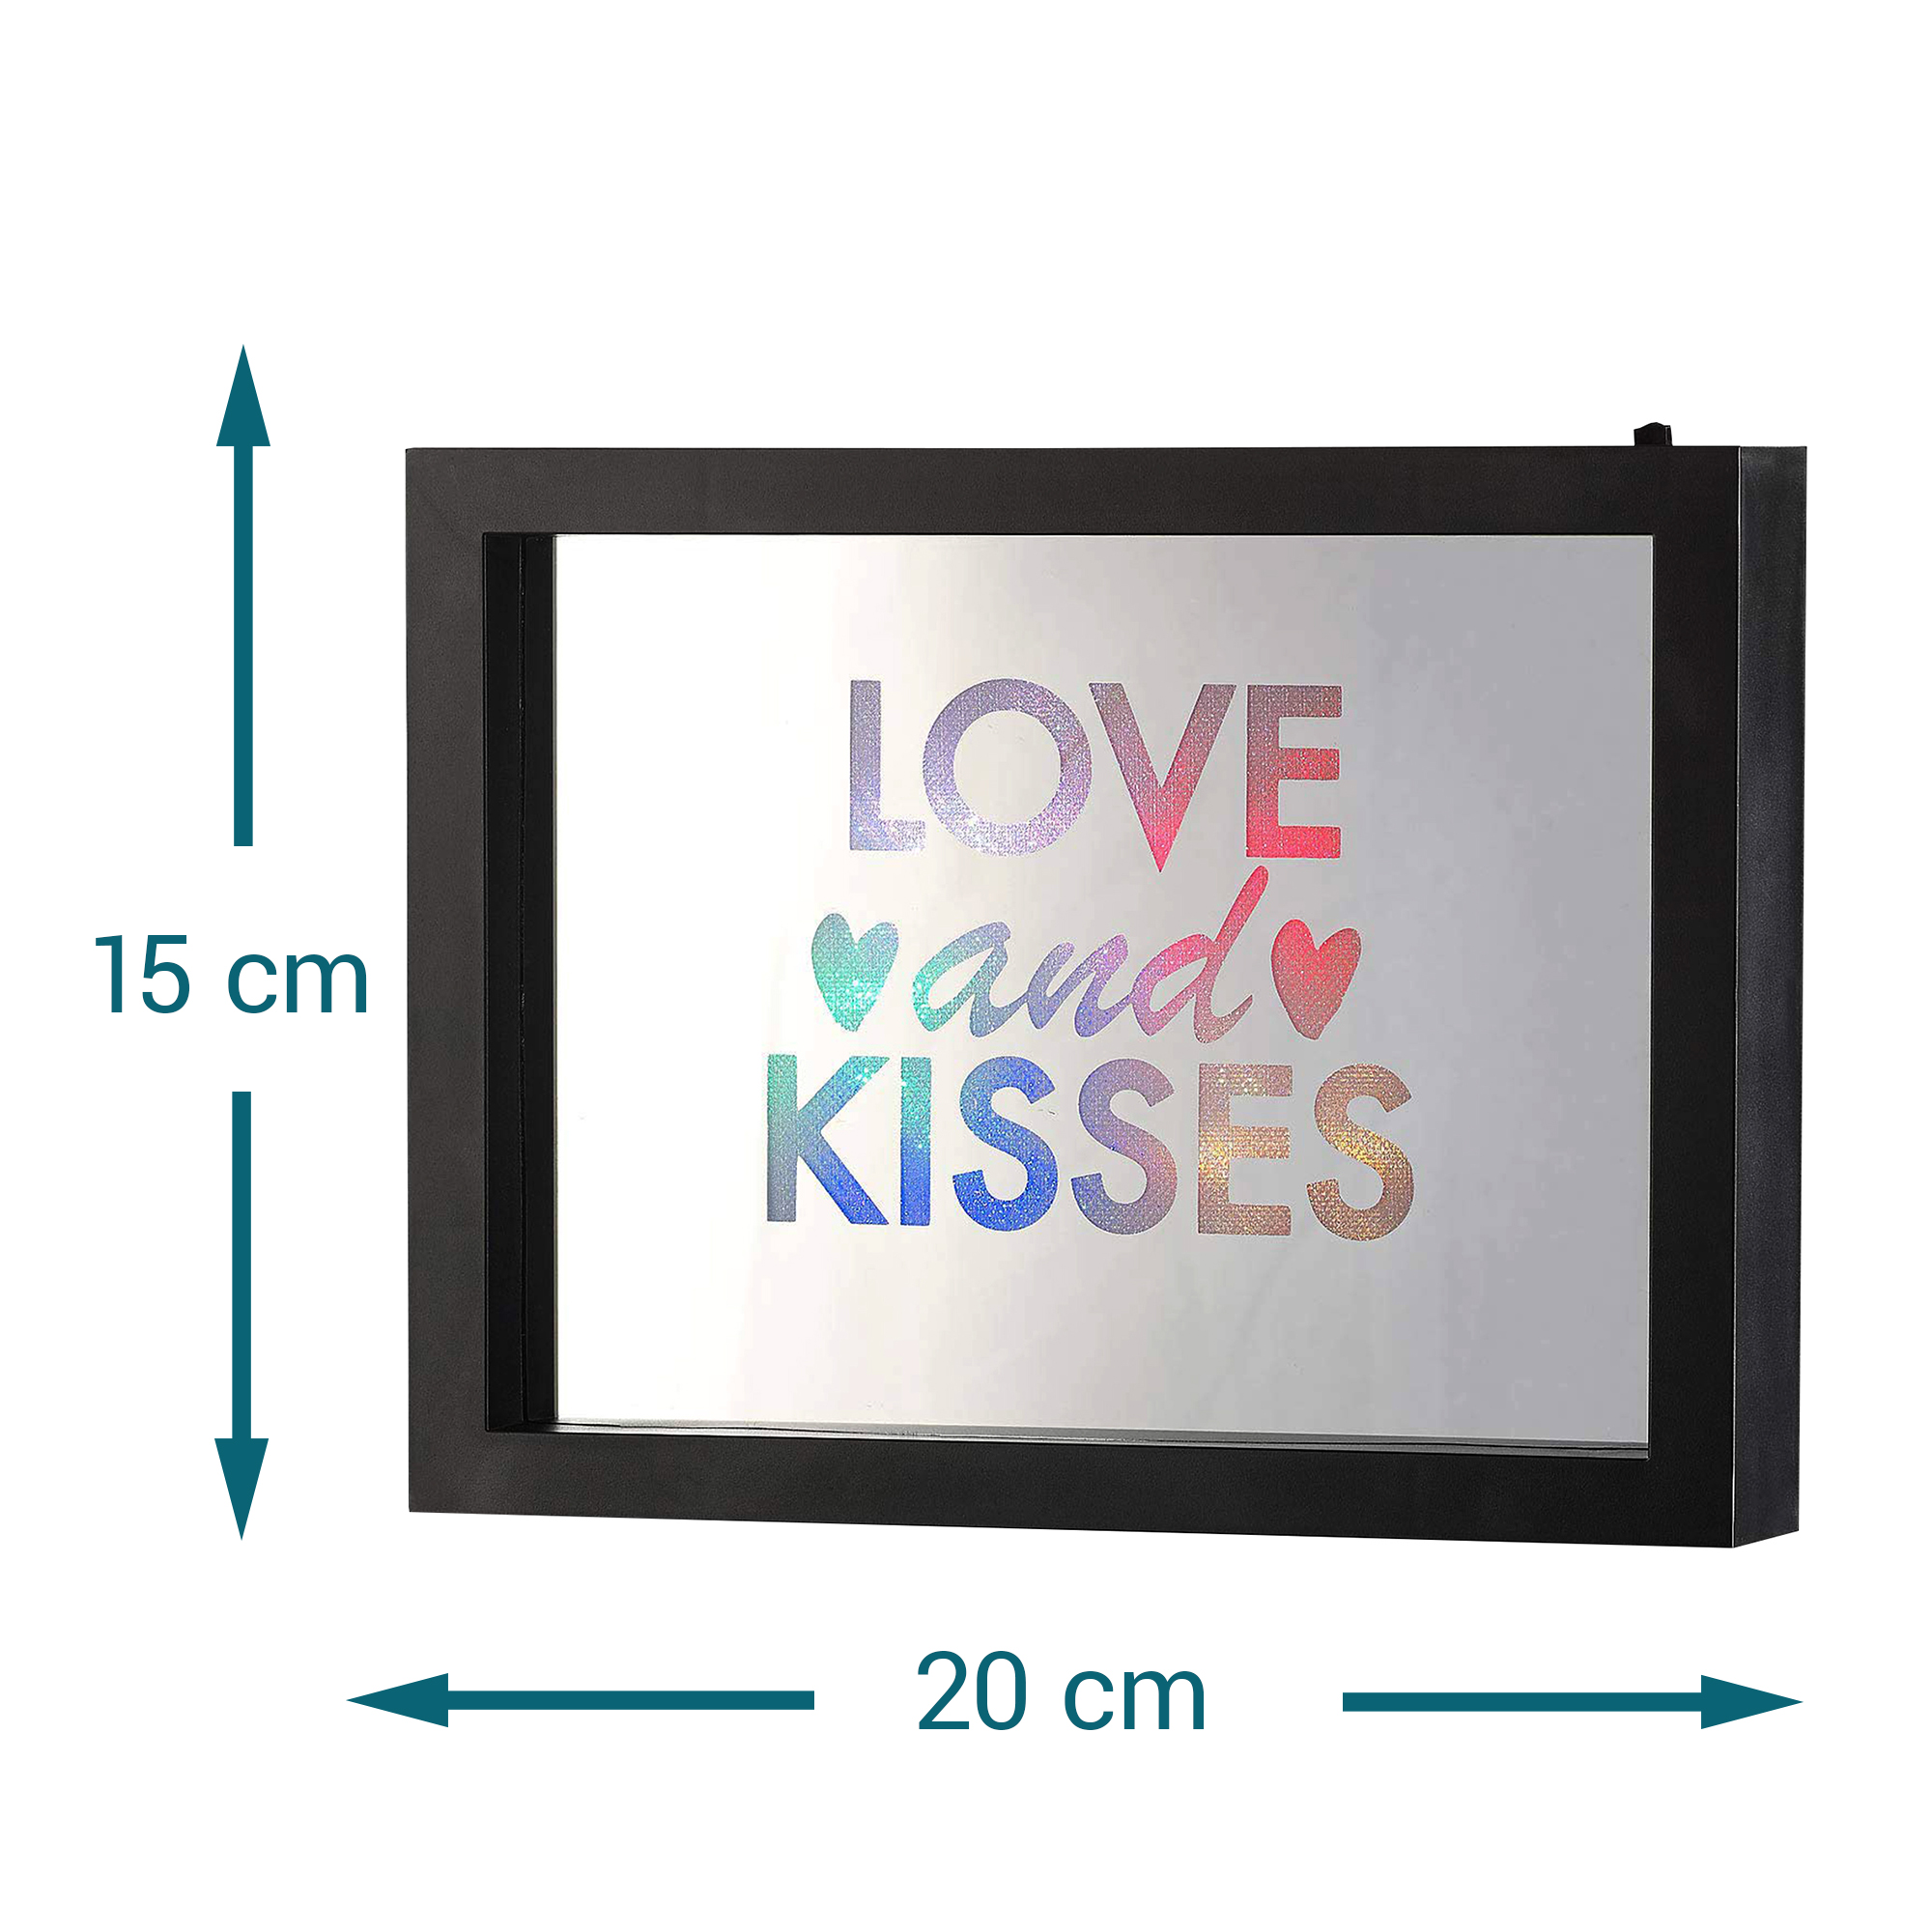 LED Rahmen mit Farbwechsel - Love And Kisses 4065 - 9